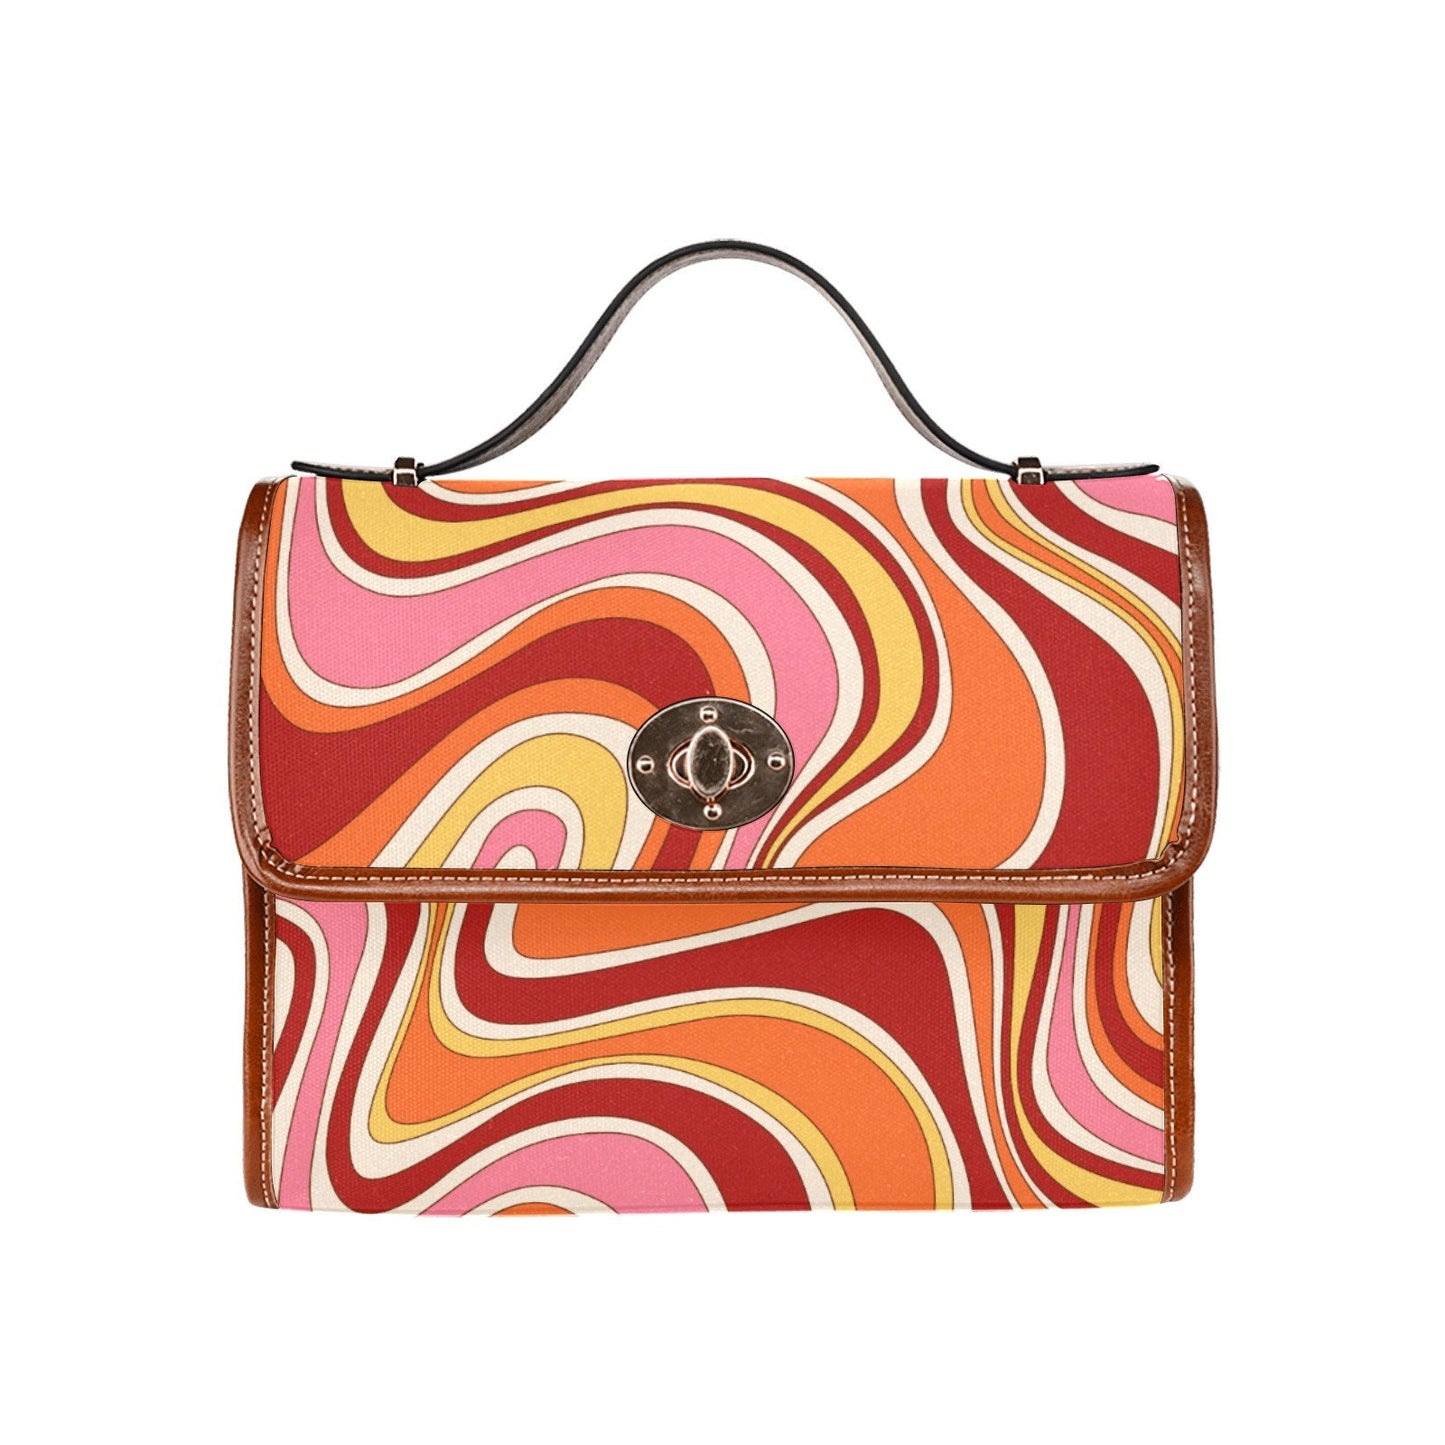 Vintage style handbag, Retro Handbag, Women's Purse, Hippie bag, 70s Style purse, Red Stripe Handbag,70s handbag, 70s inspired, Women's Bag